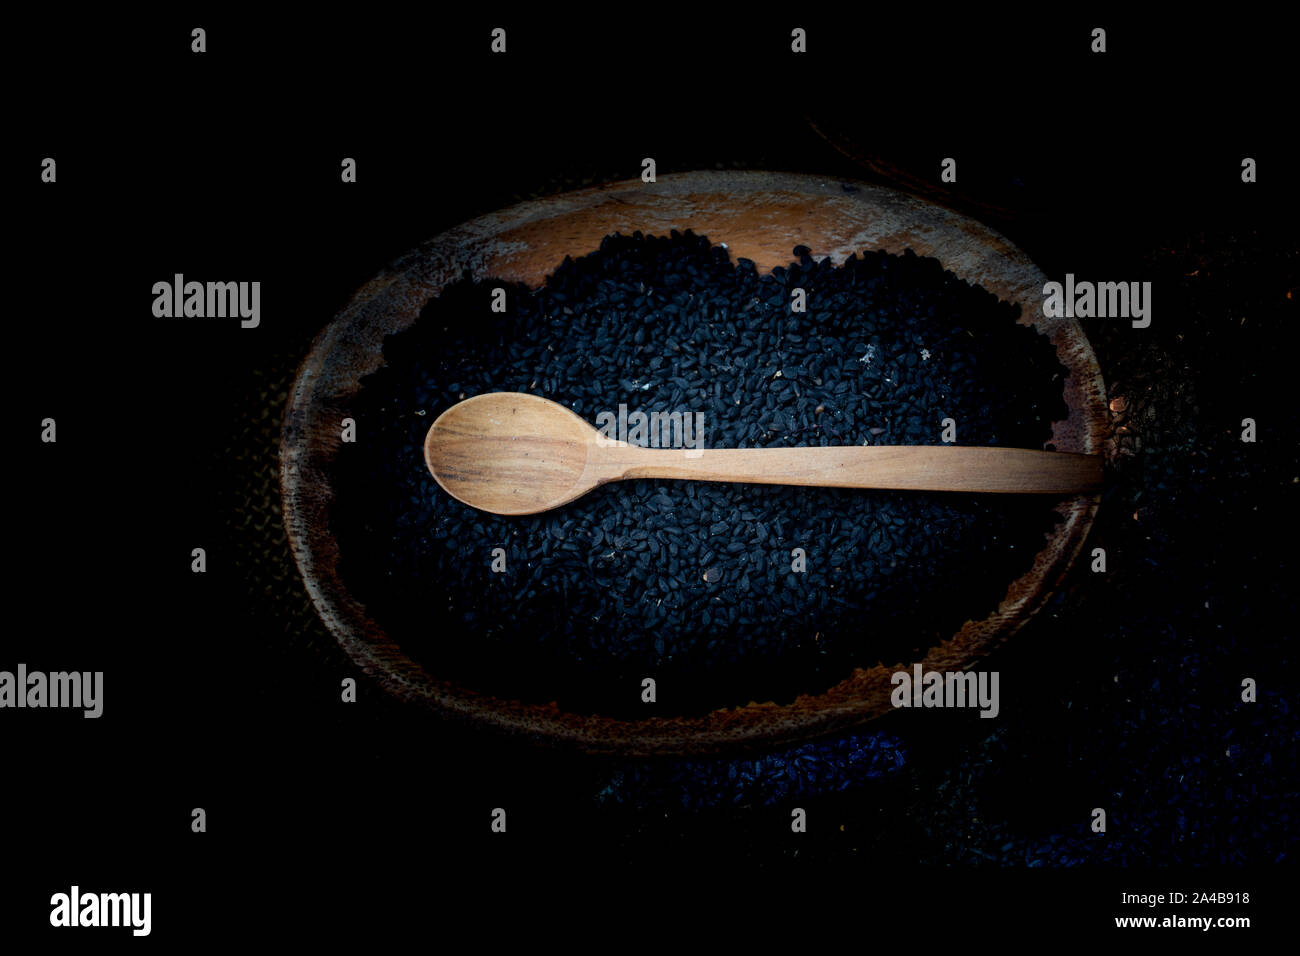 Nigella sativa Black Cumin kalonji seeds (kalonji) in view Stock Photo